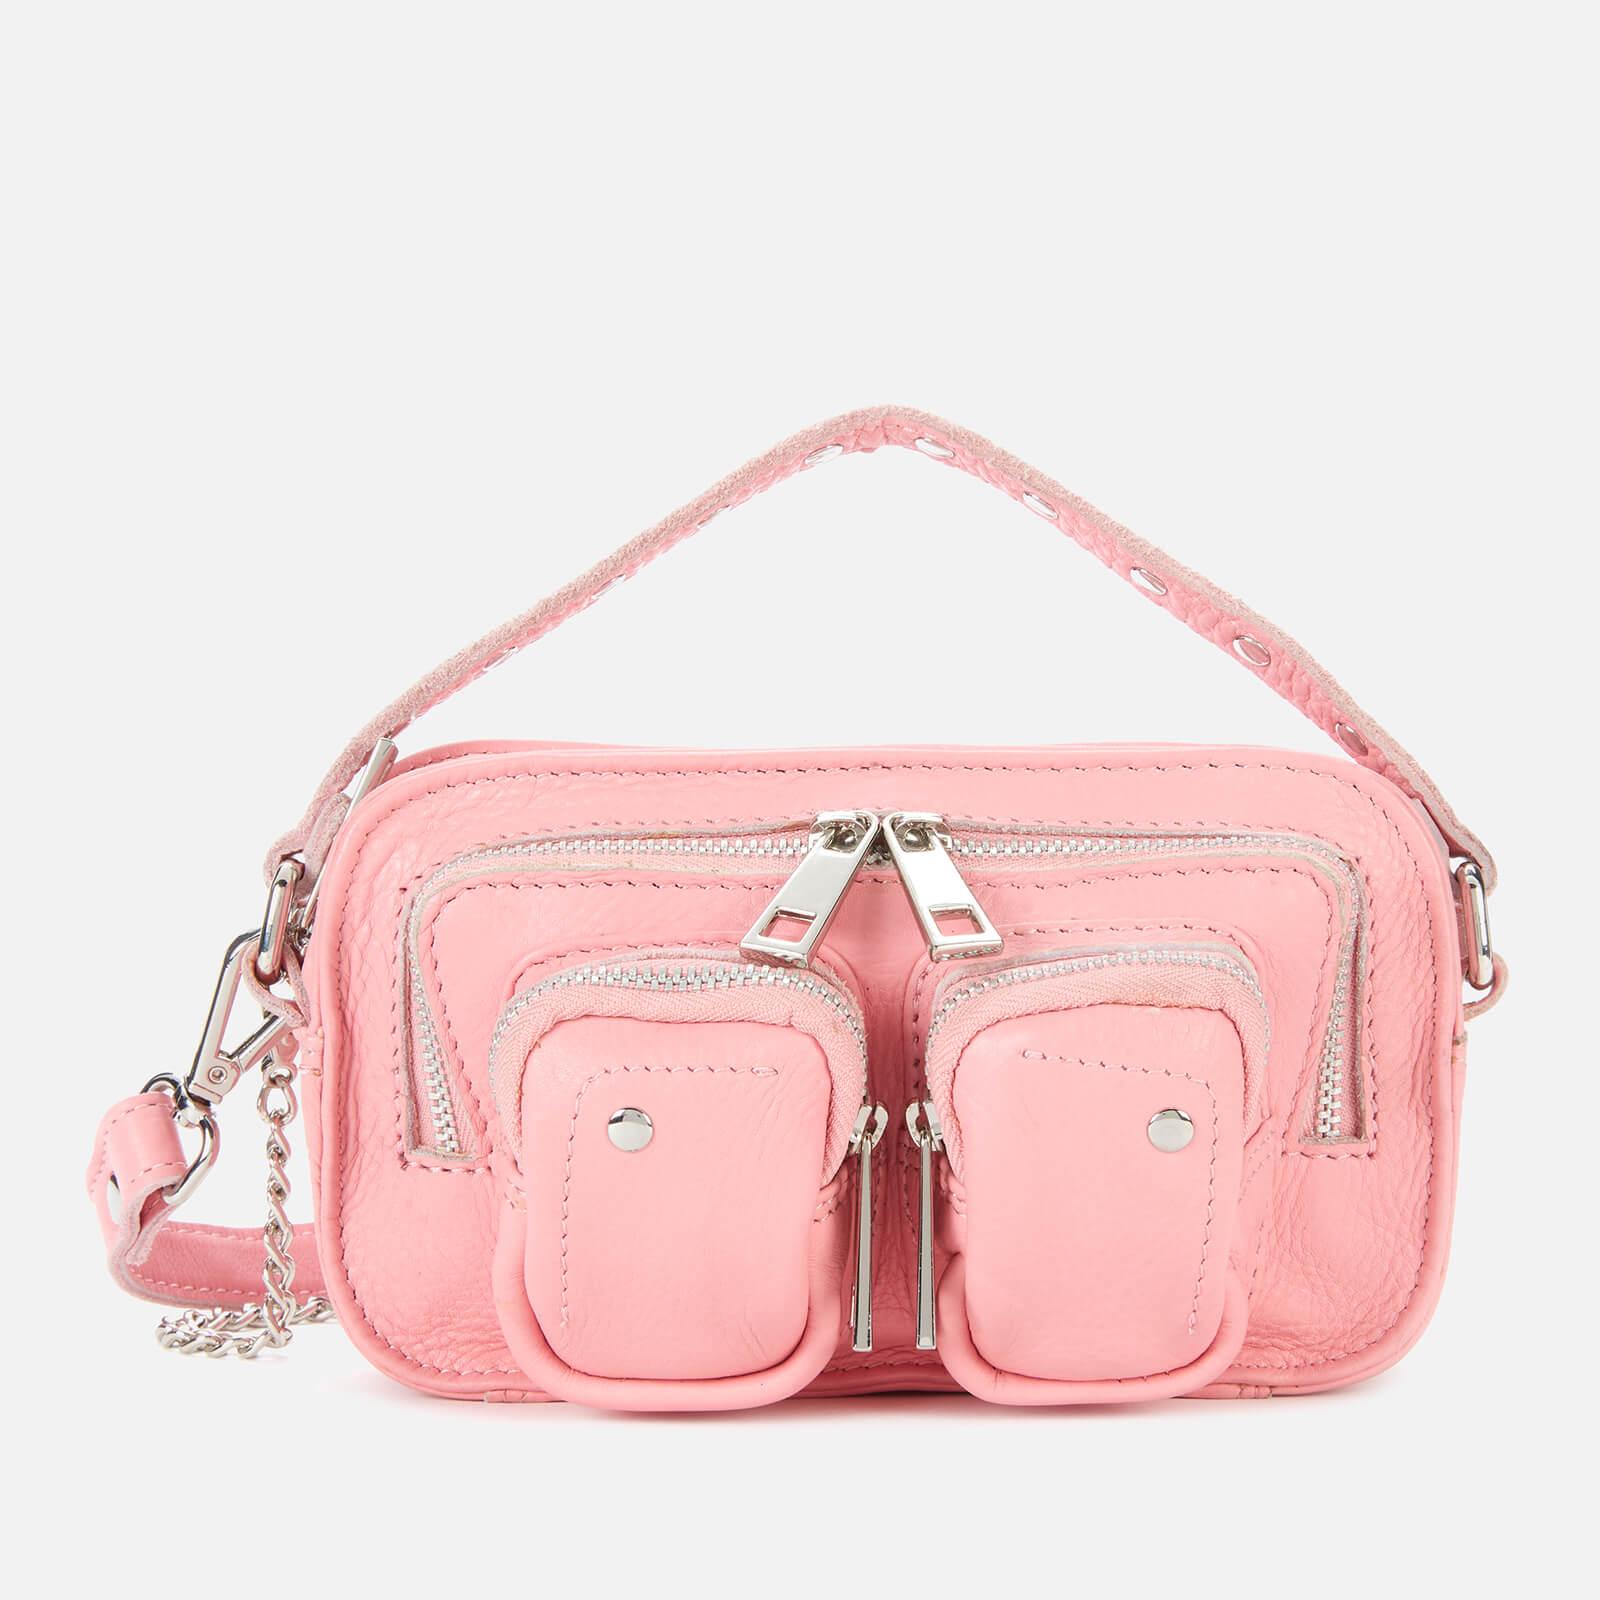 Nunoo Leather Helena Cross Body Bag in Pink | Lyst Canada